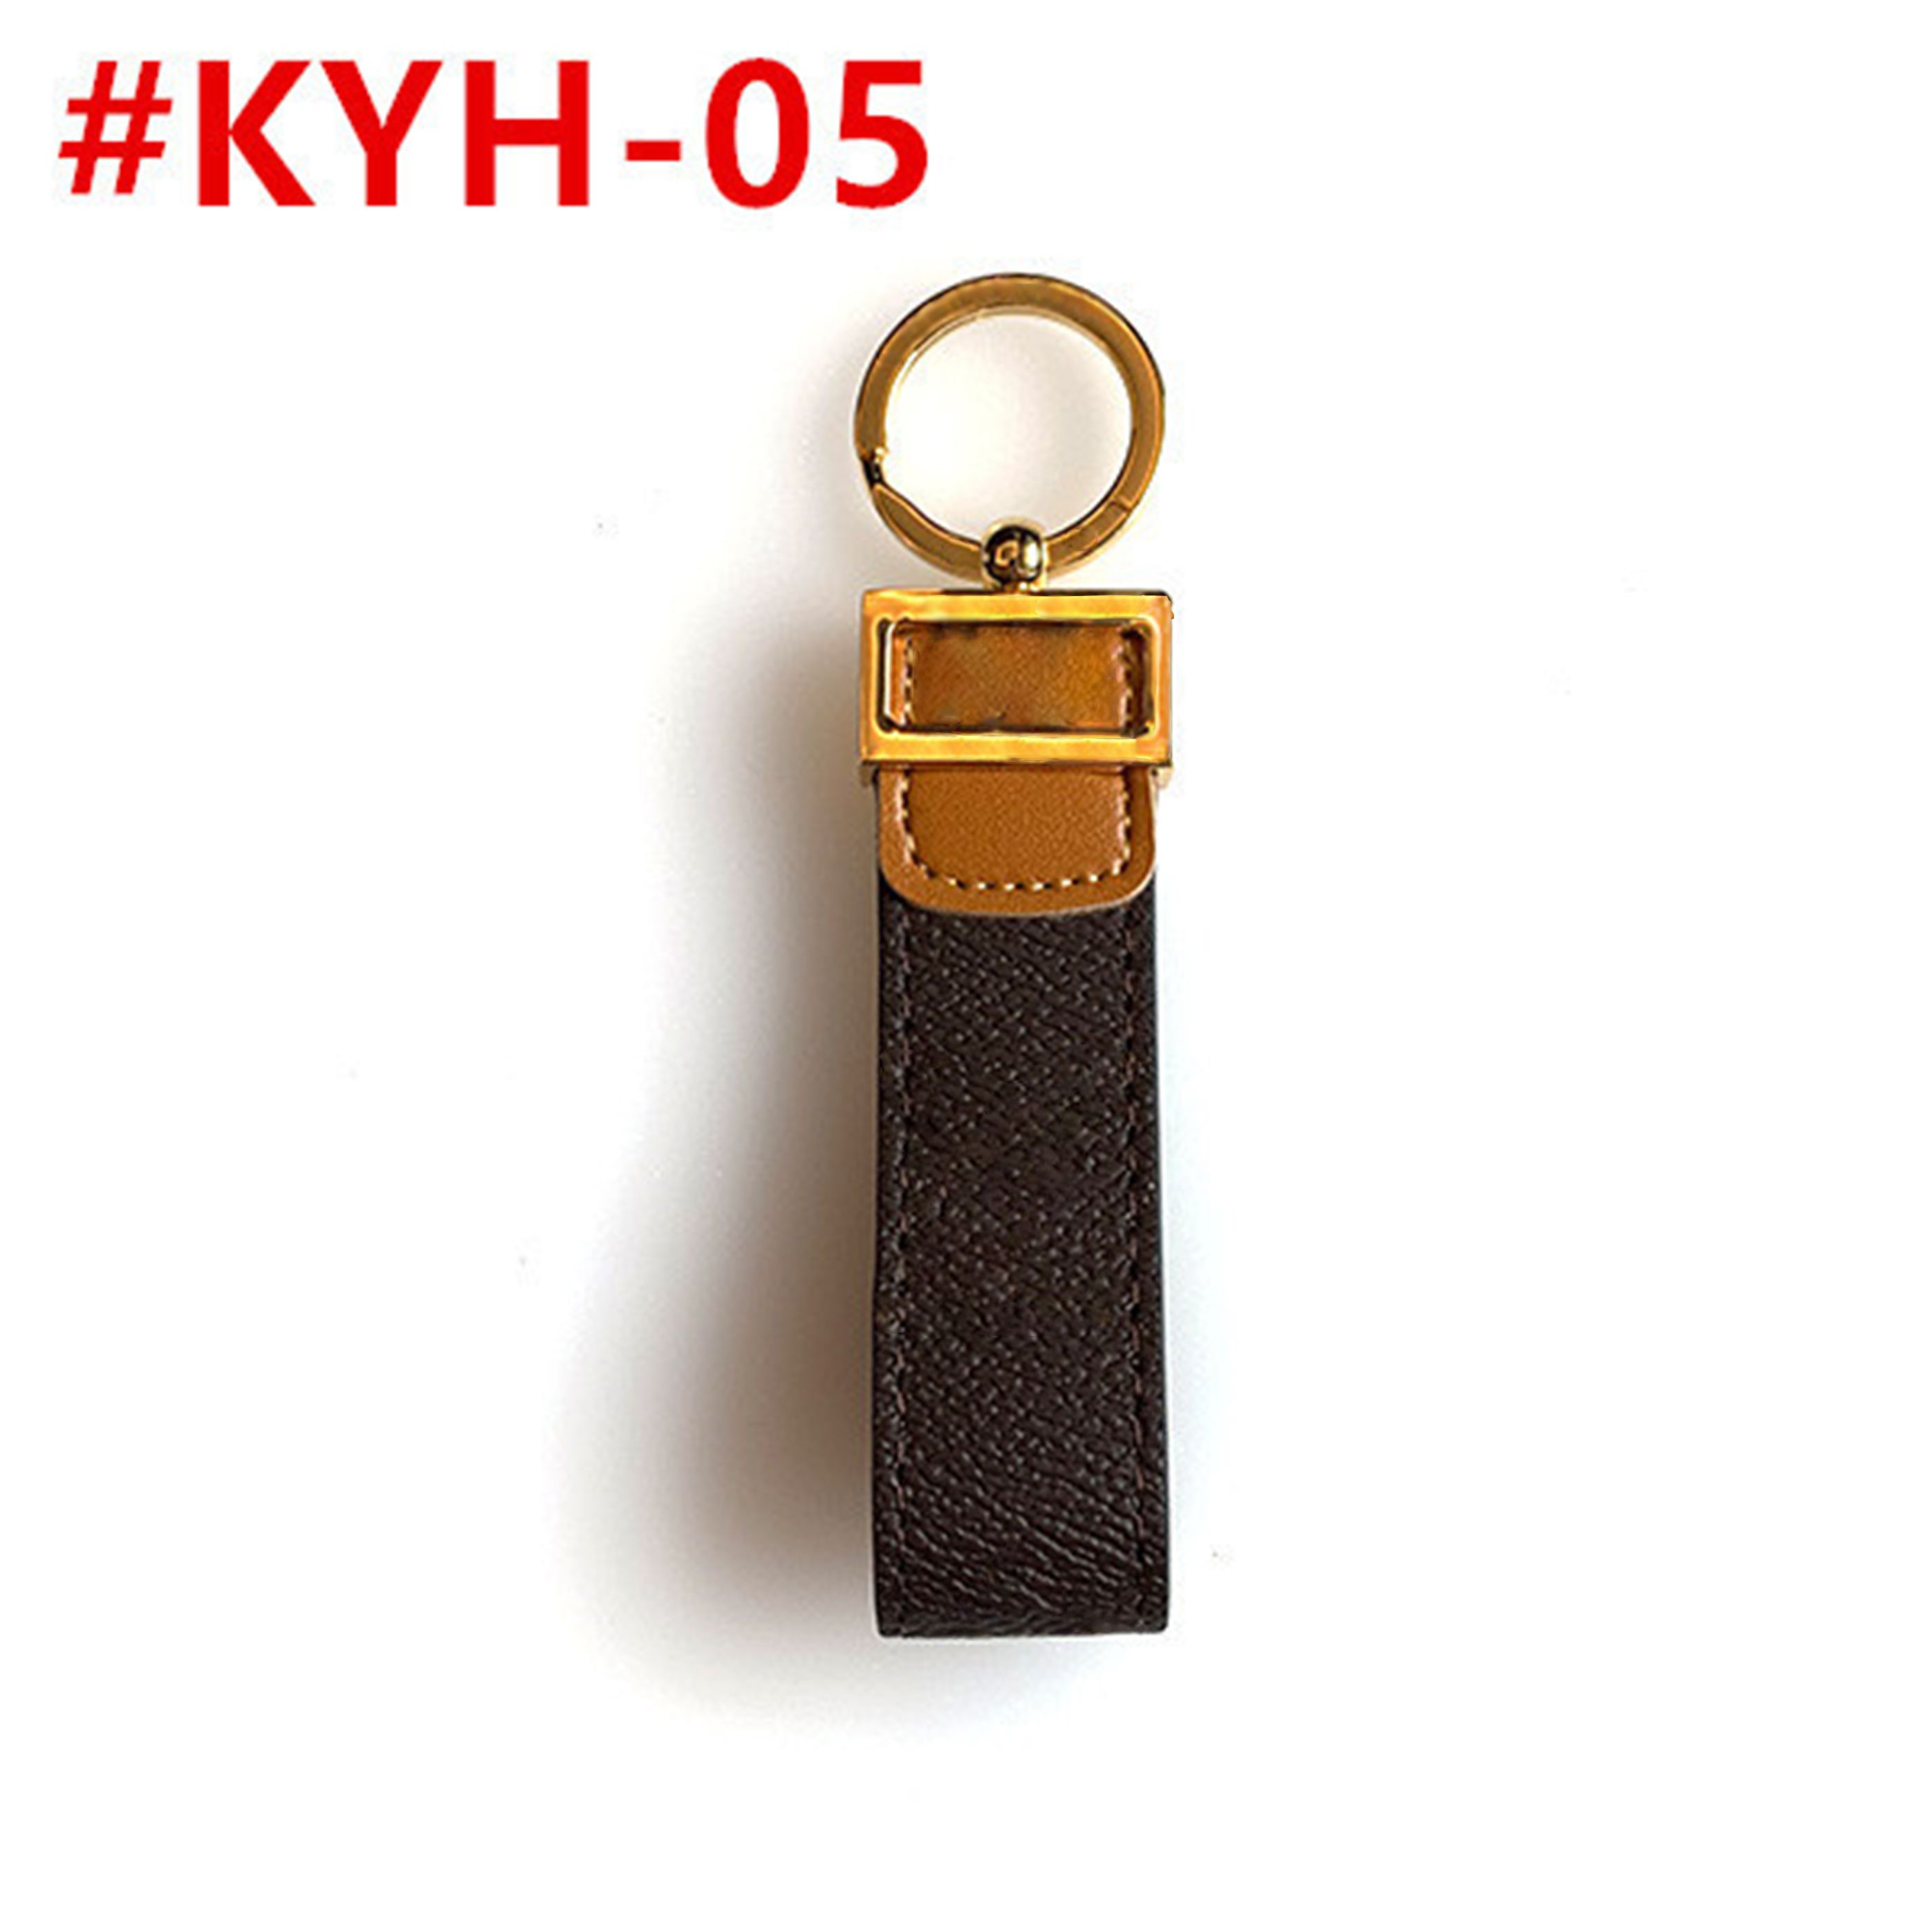 # Kyh-05